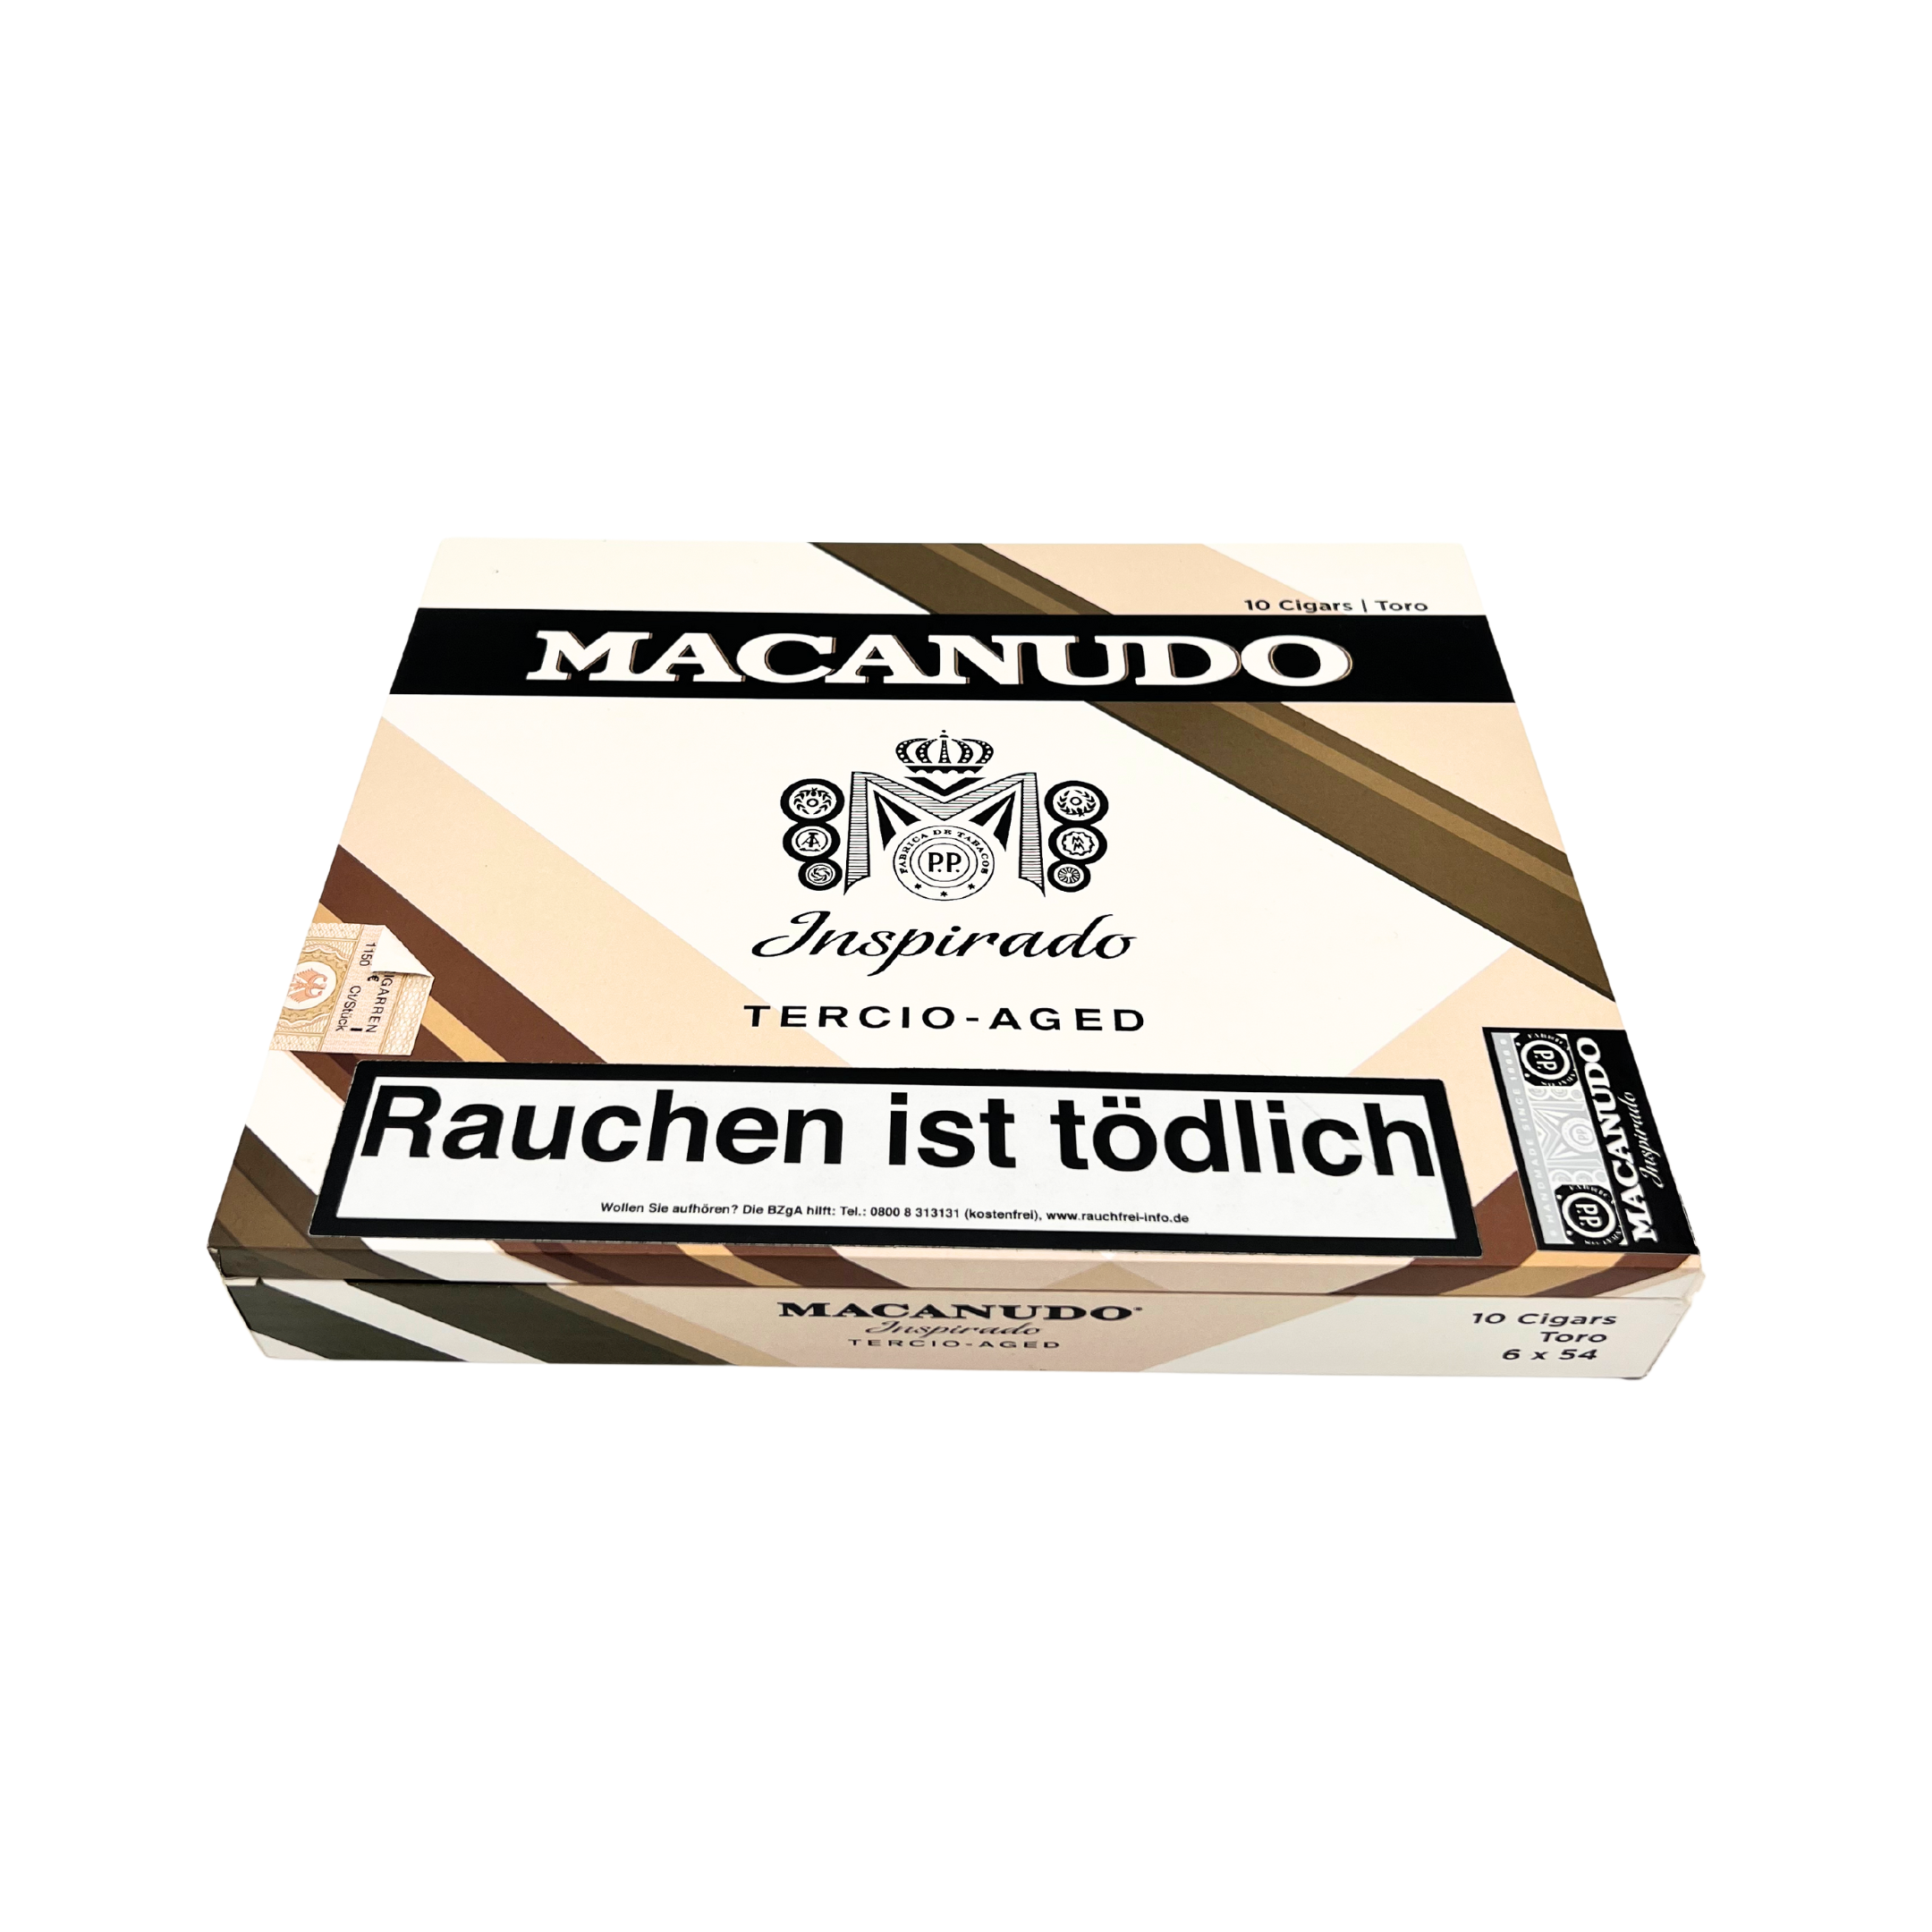 MACANUDO - Limited Editions Inspirado TERCIO - AGED Toro